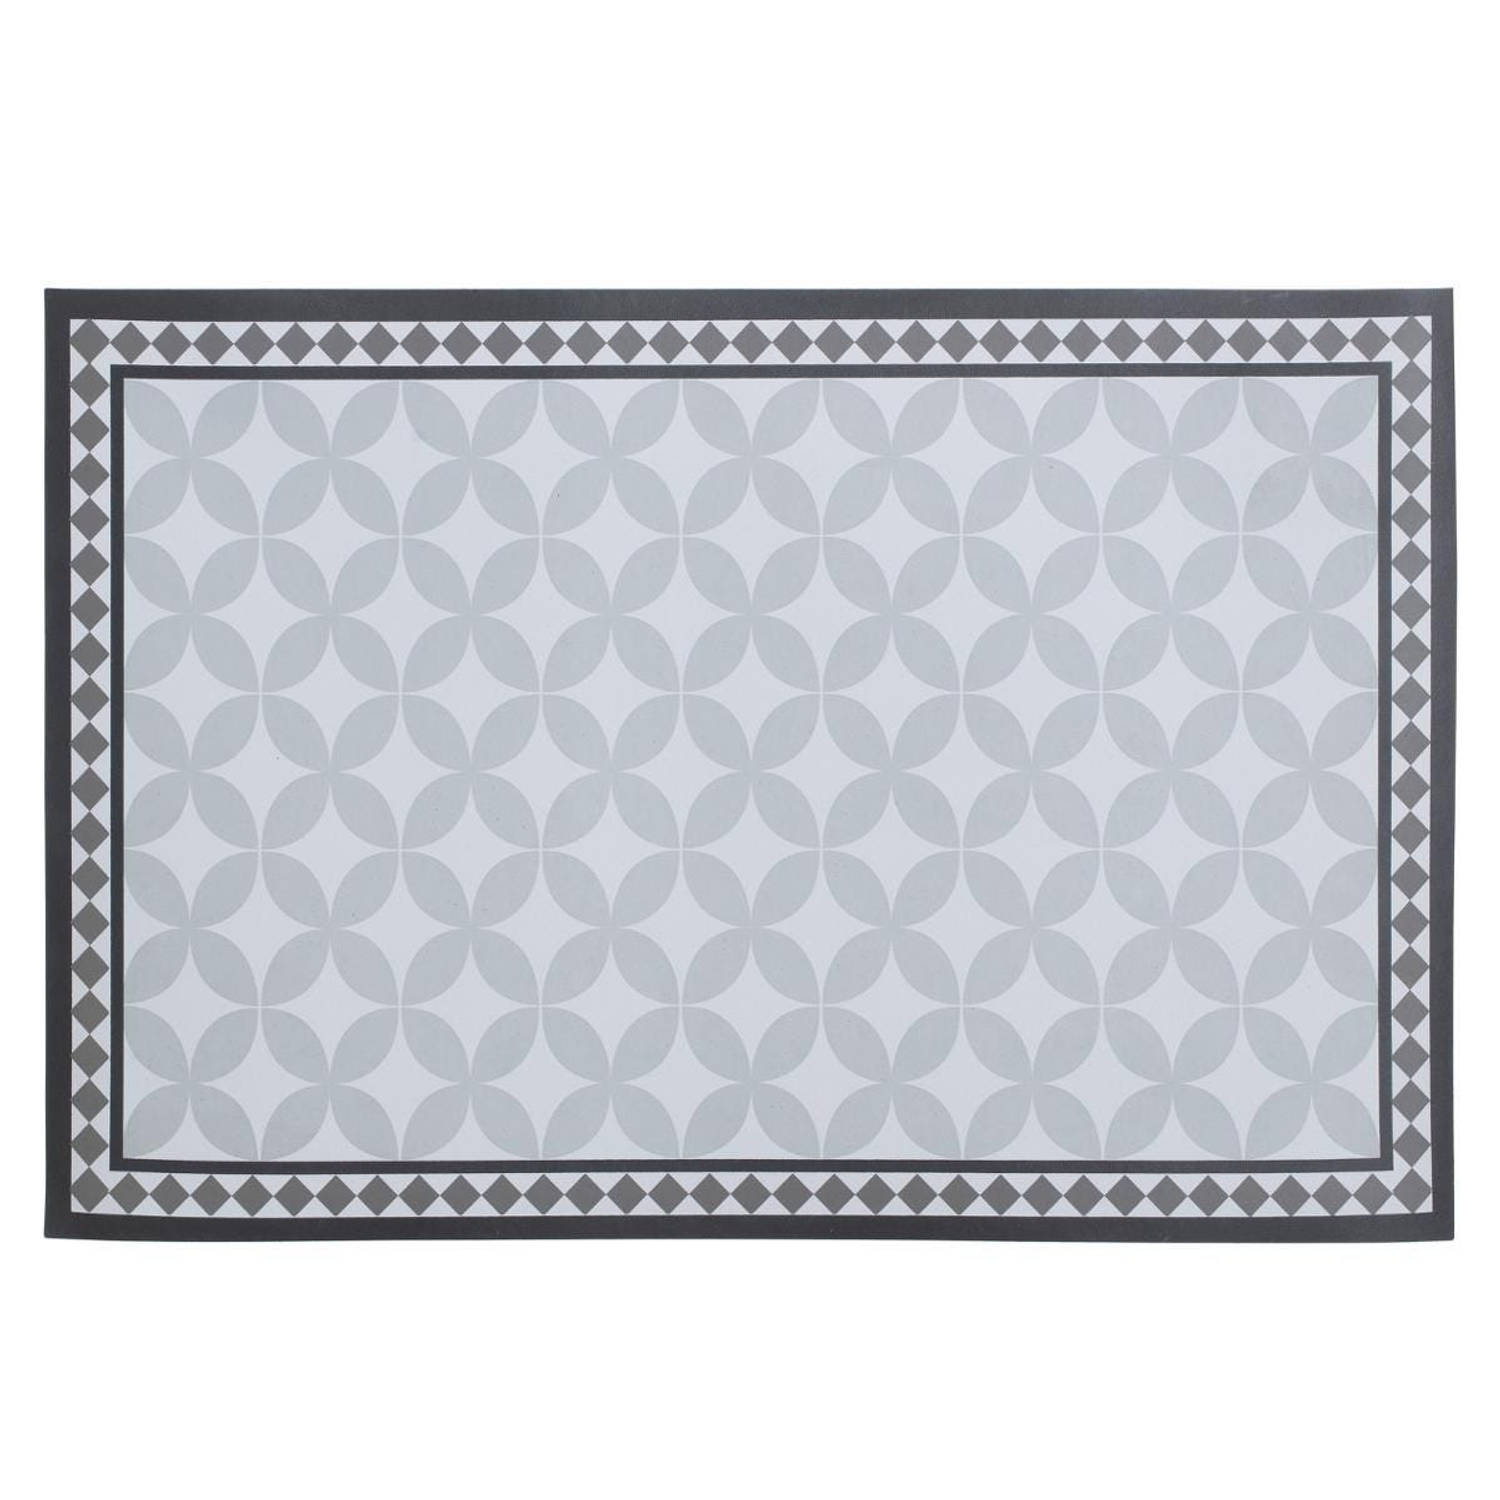 Rechthoekige placemat mozaiek grijs vinyl 45 x 30 cm Placemats